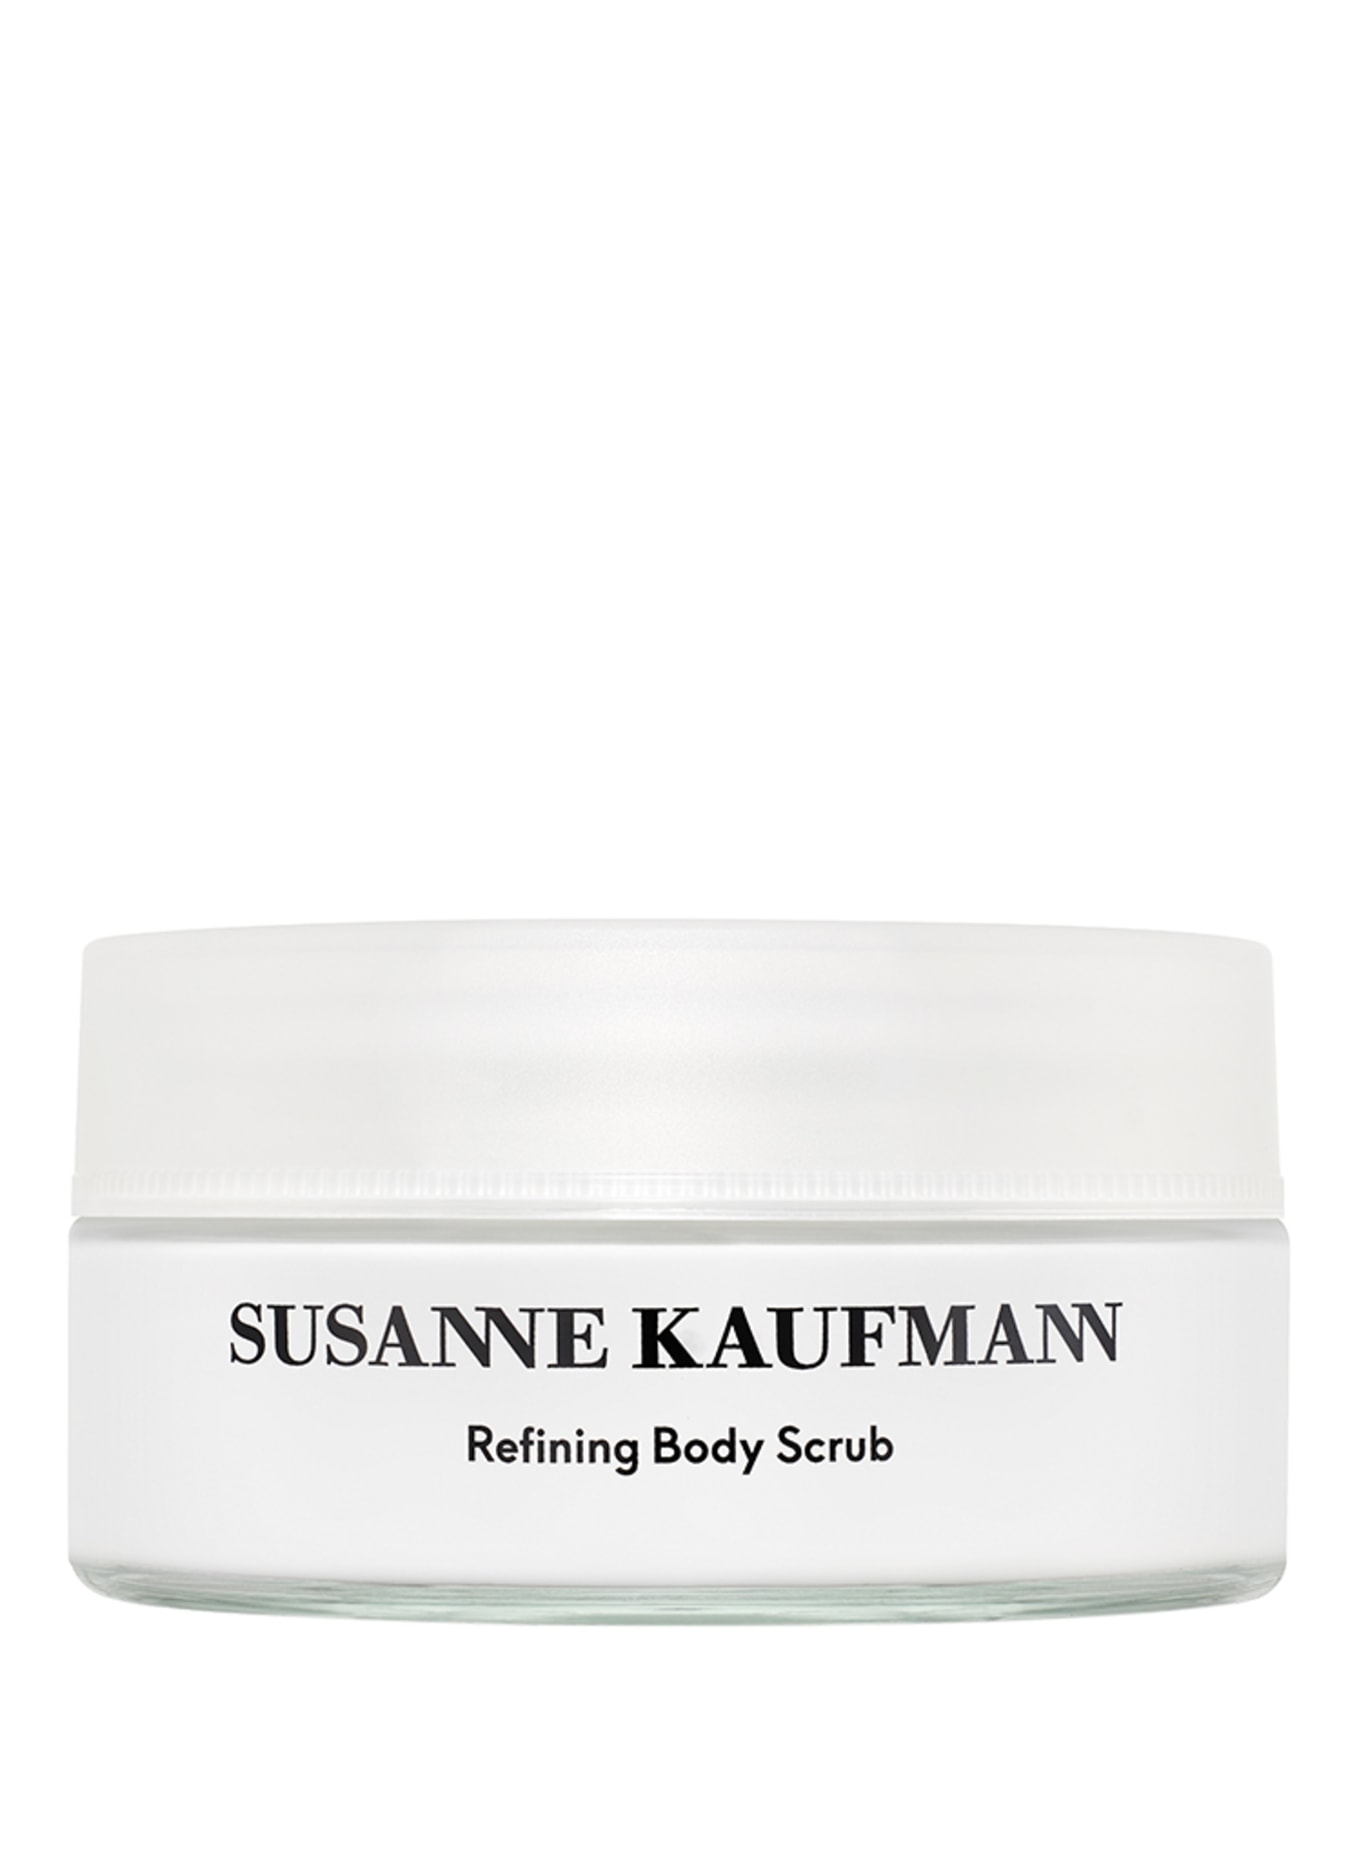 SUSANNE KAUFMANN REFINING BODY SCRUB (Bild 1)